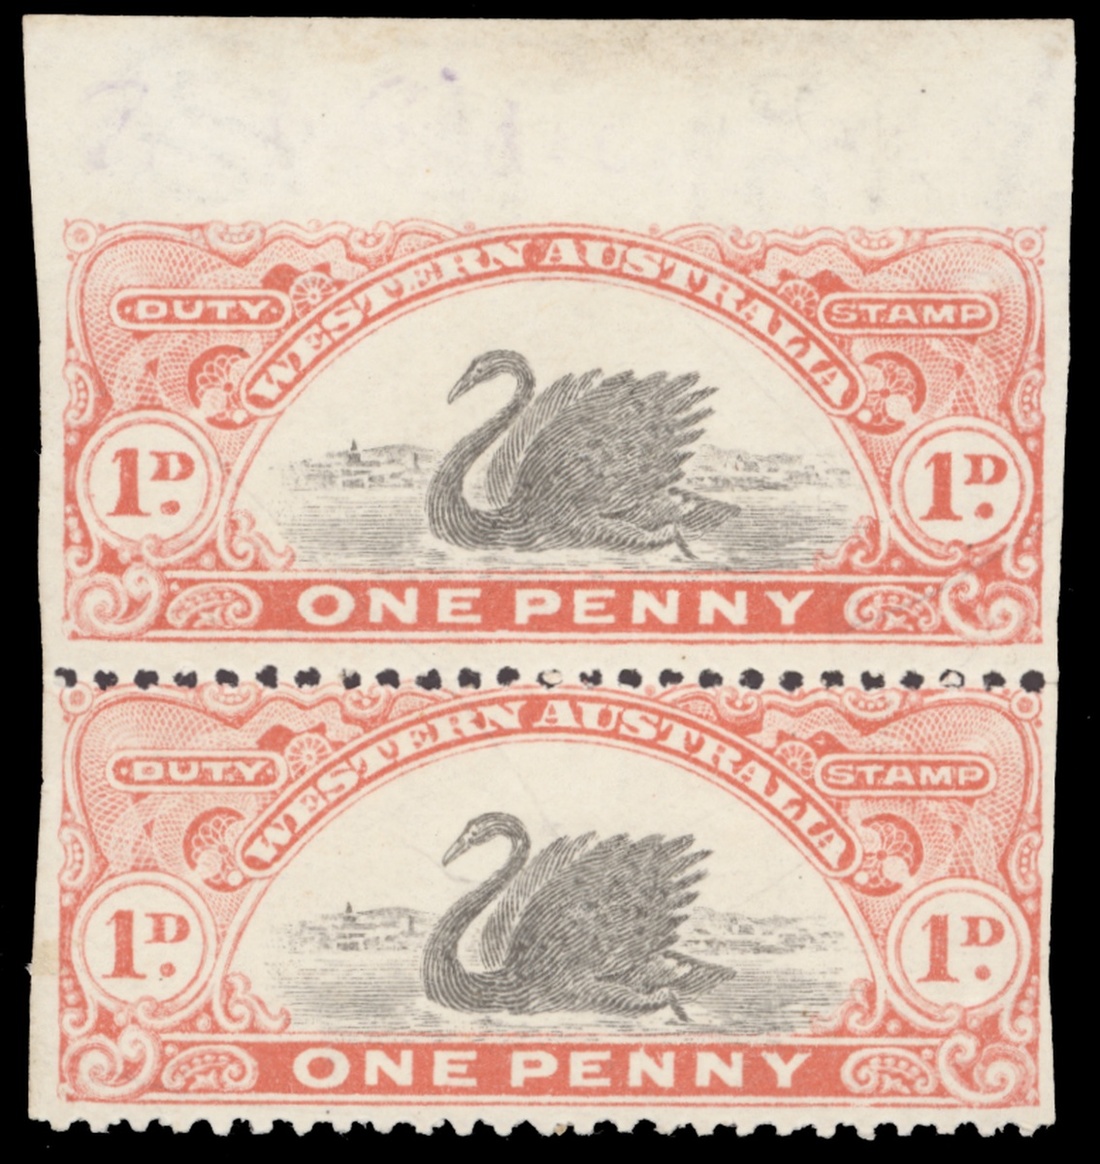 Western Australia Revenue Stamps ~ skaredesigns